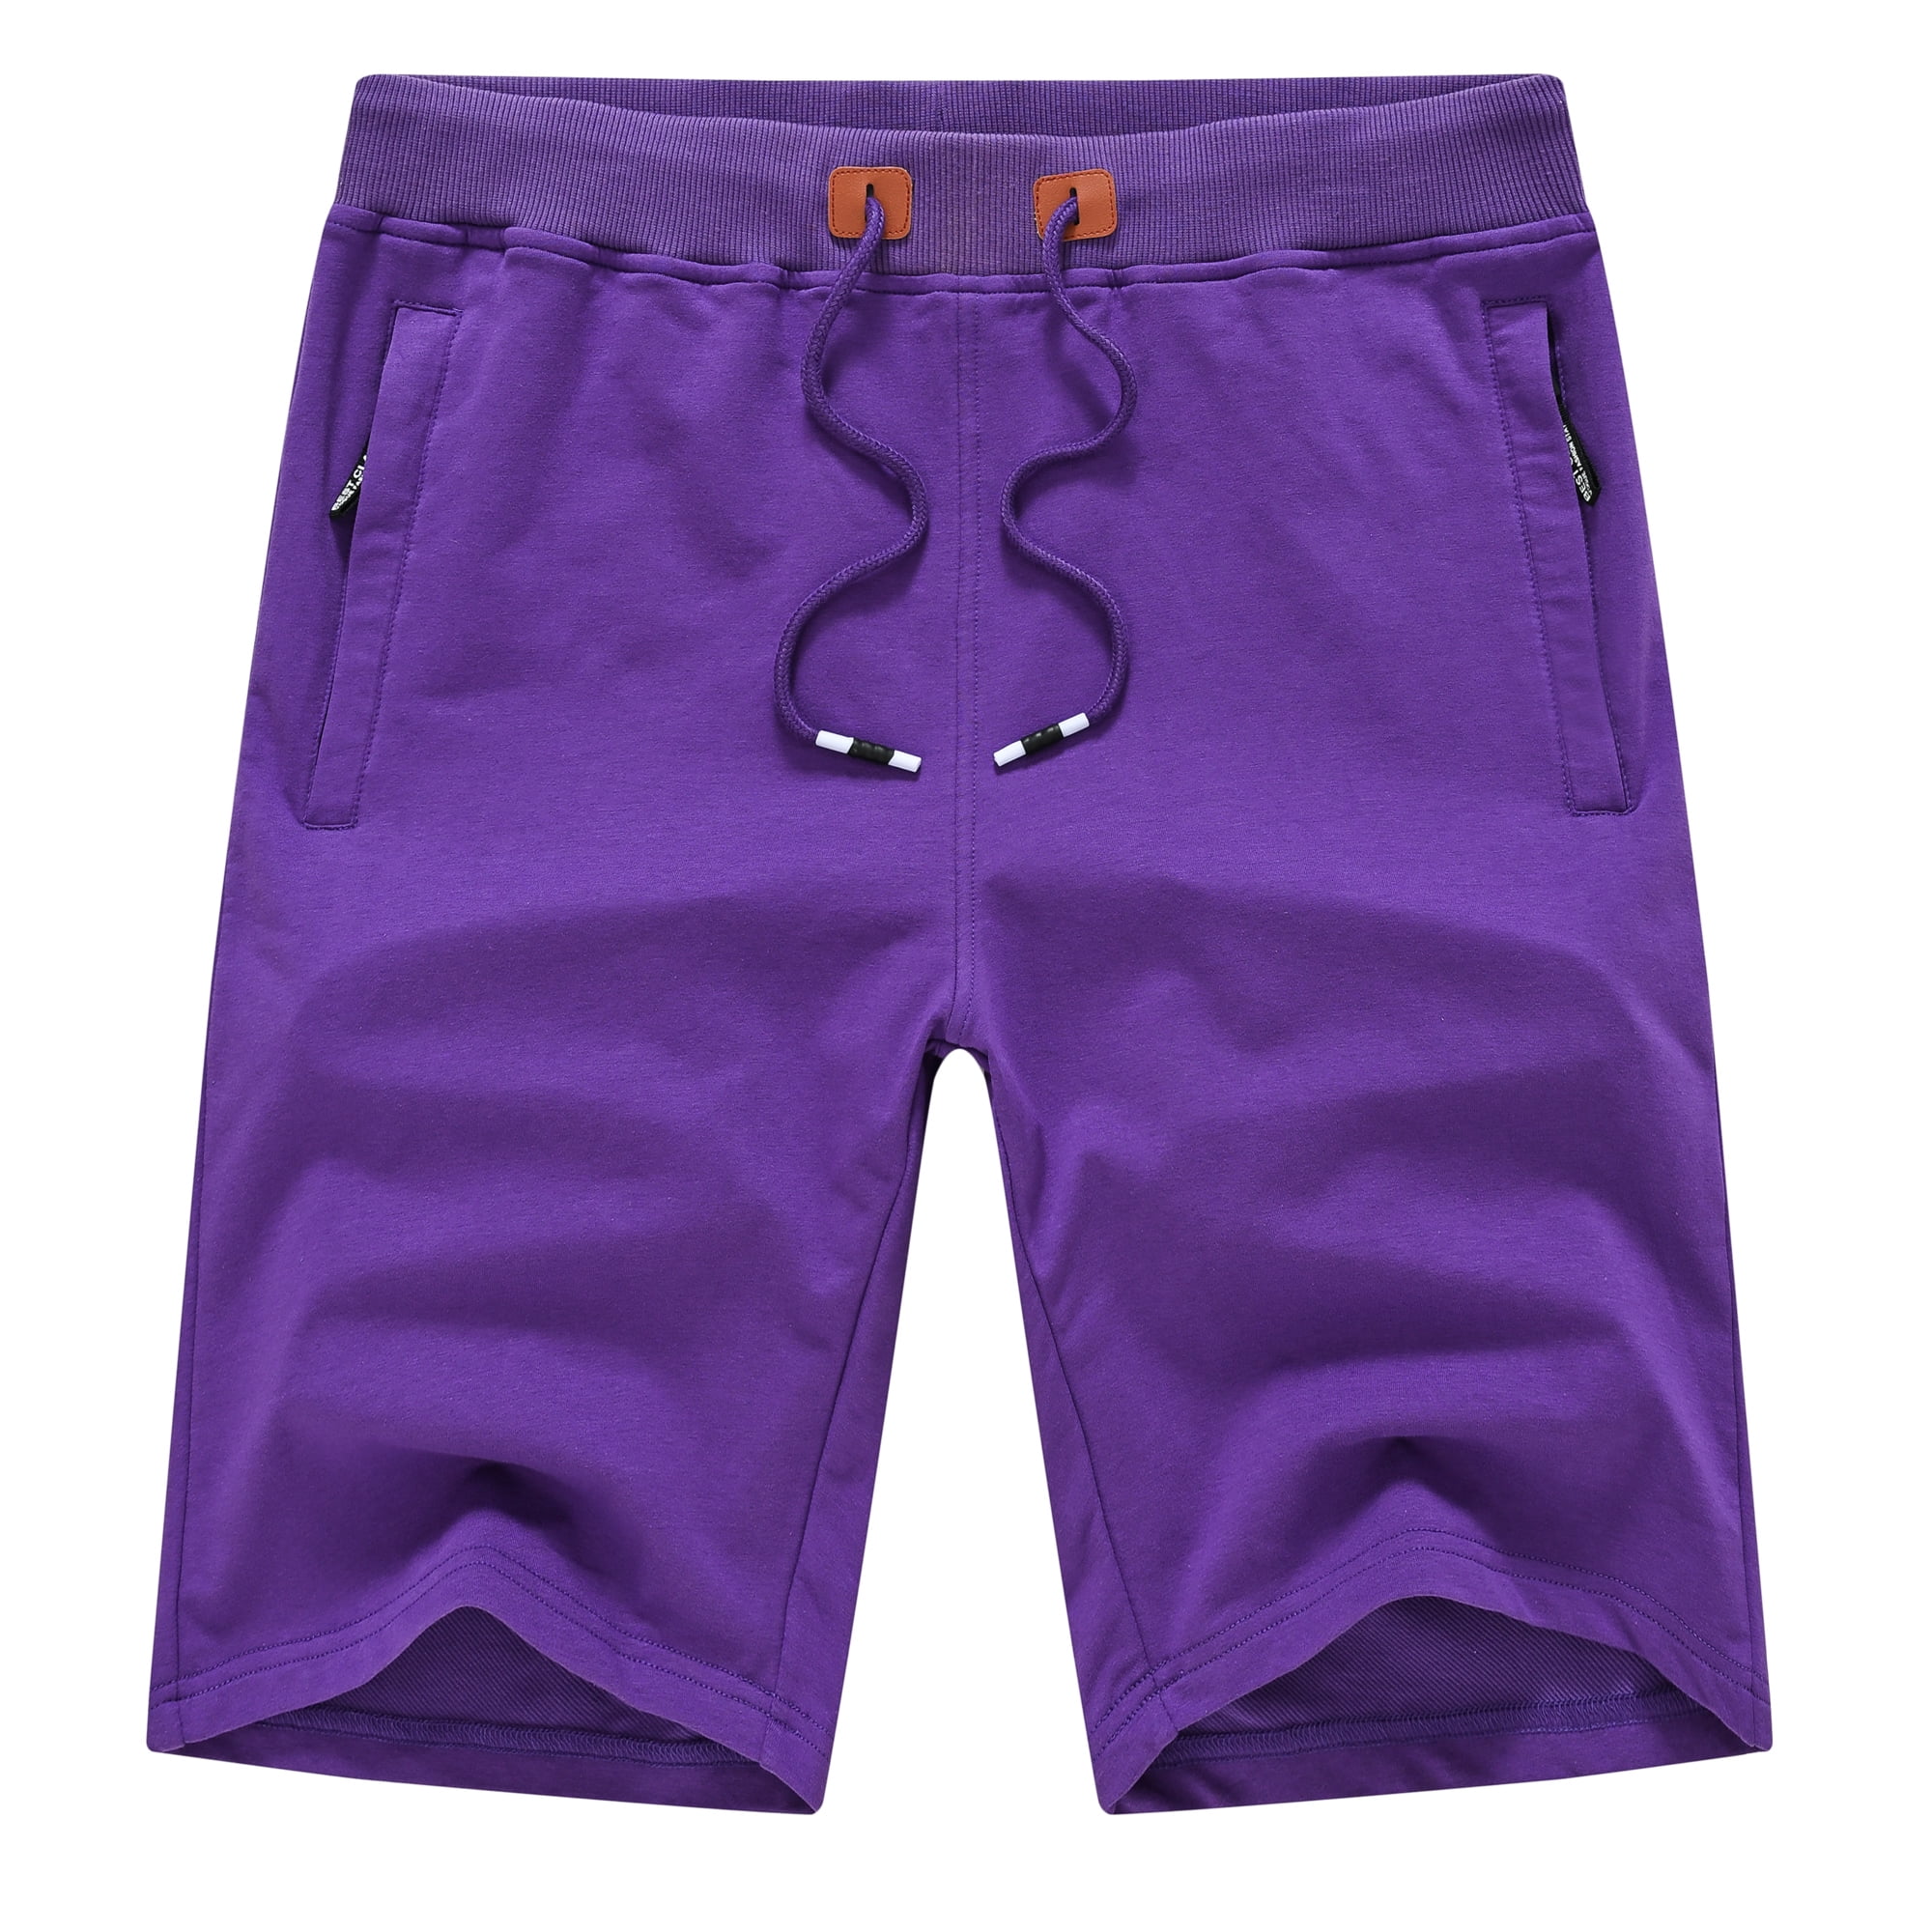 YuKaiChen Men's Shorts Casual Drawstring Classic Fit Gym Workout Shorts with Zipper Pockets 